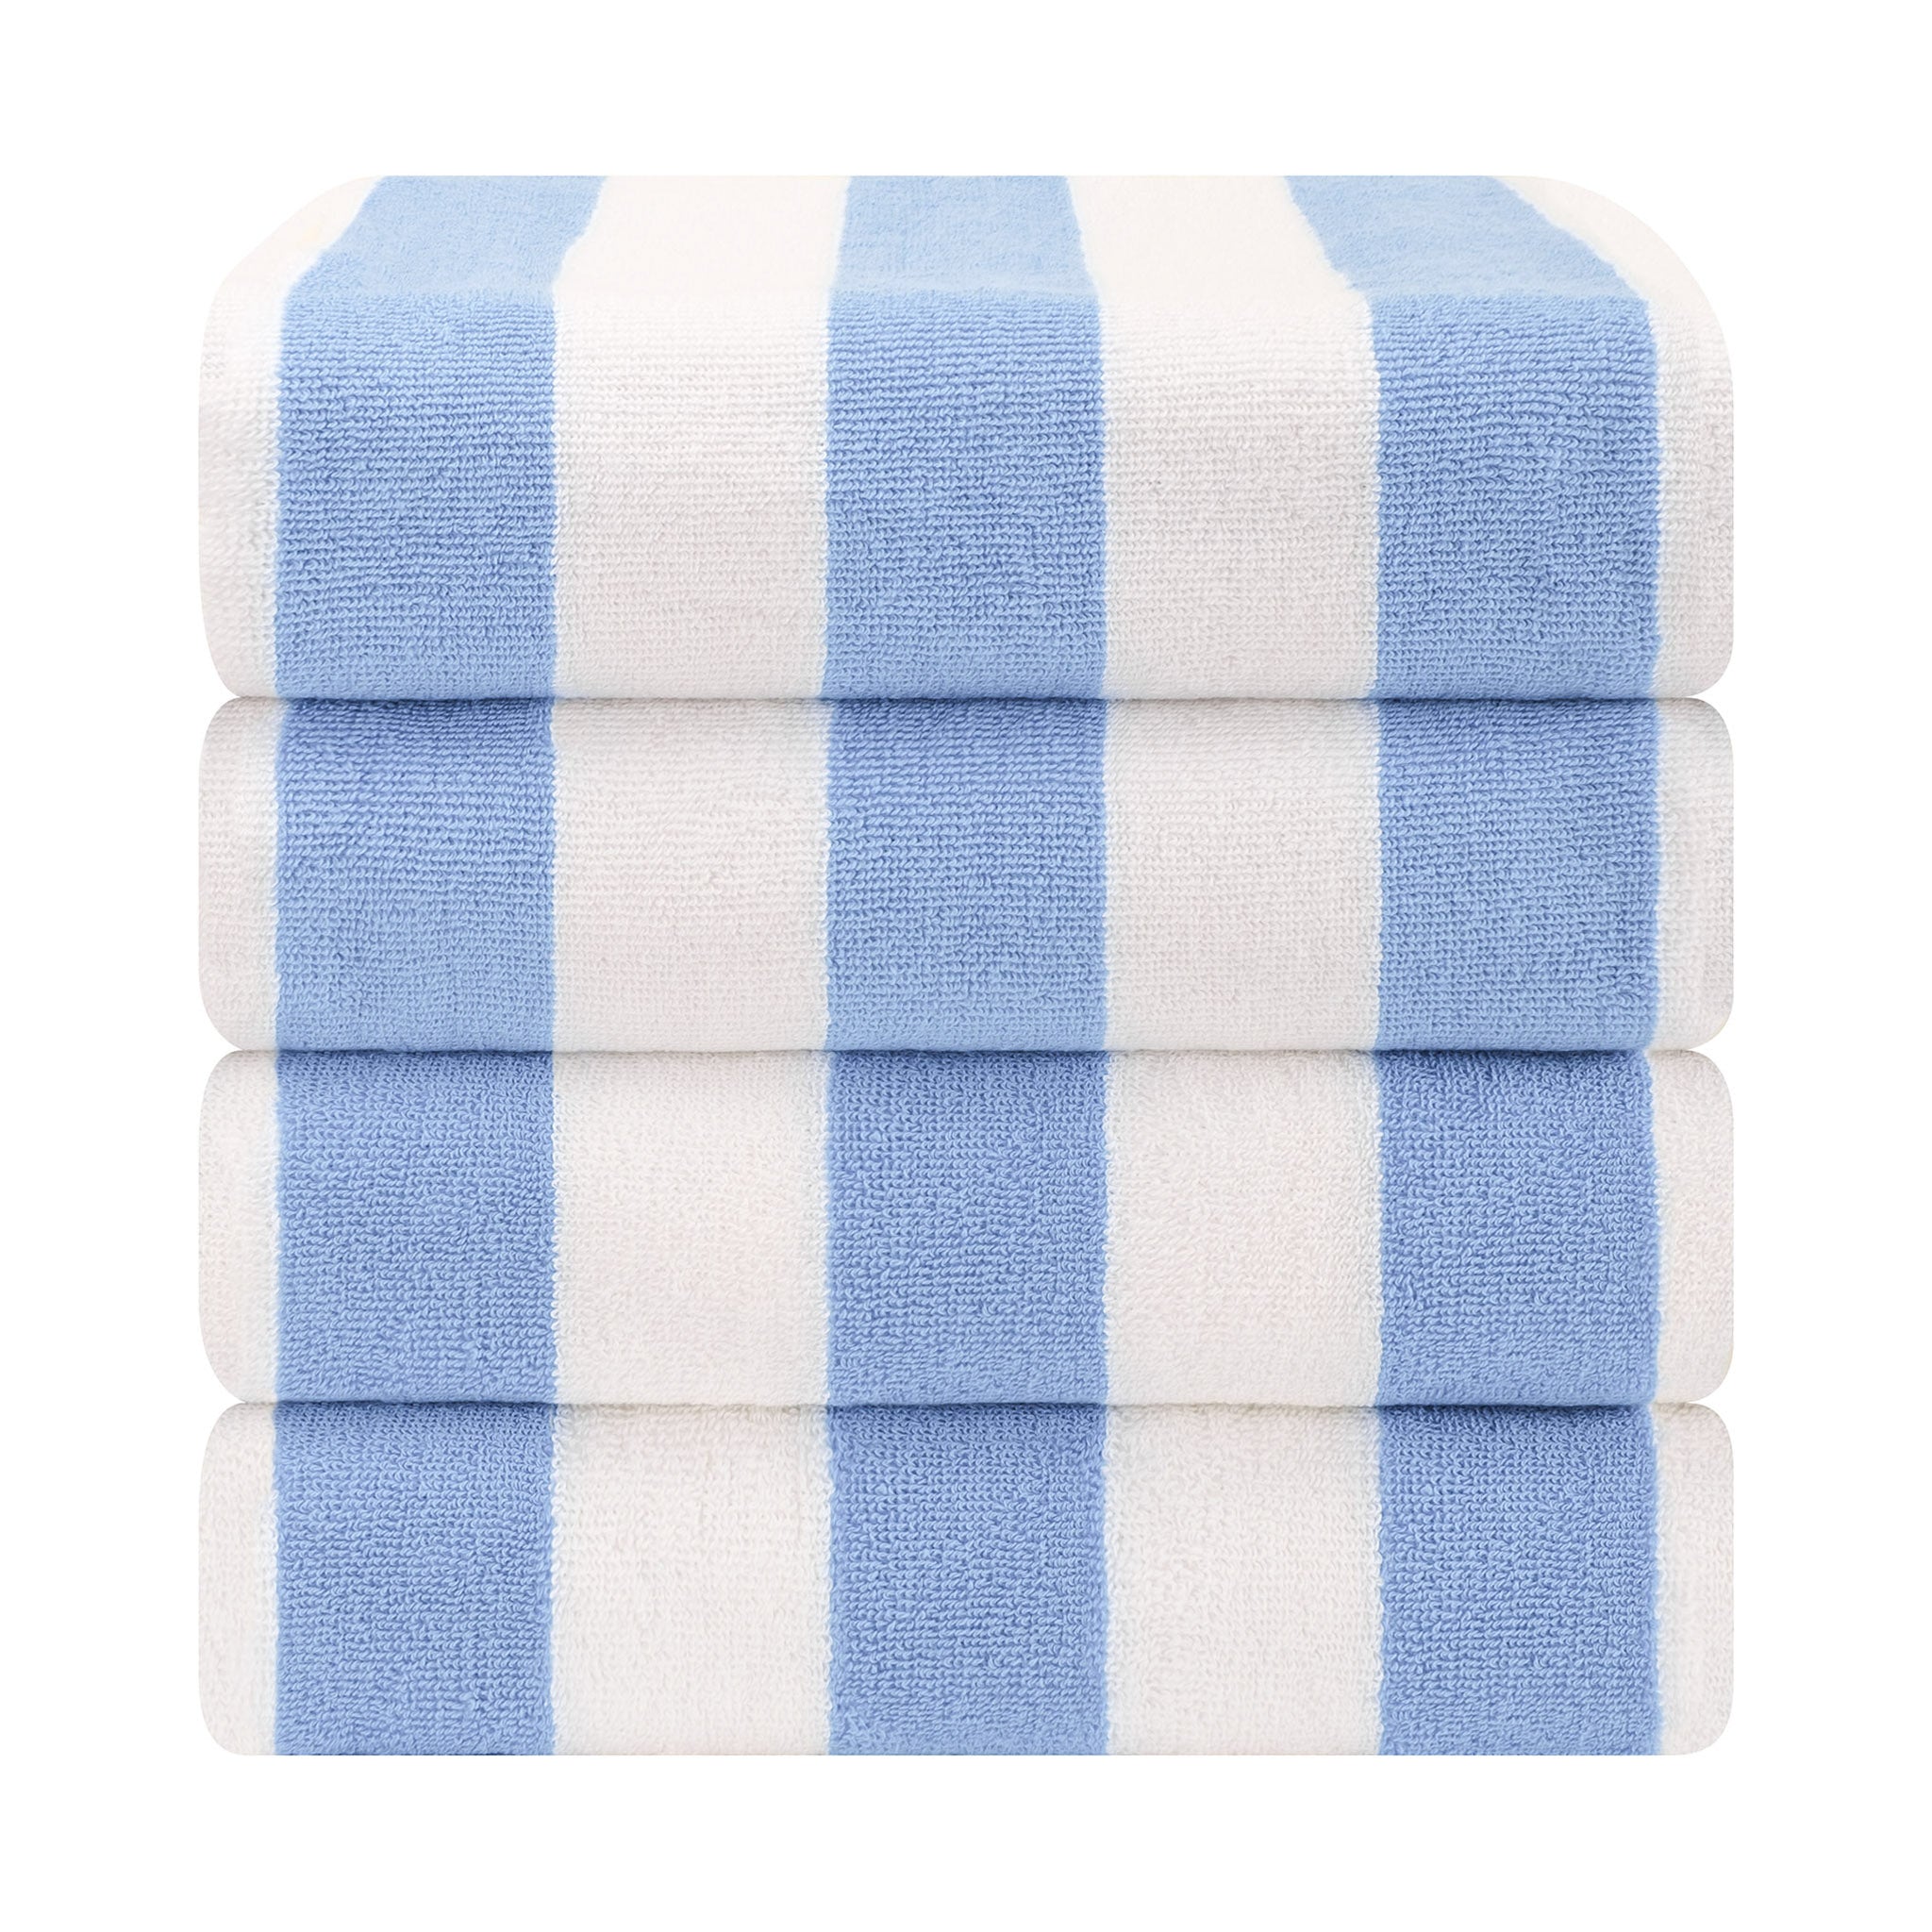 4 Pack New Large Bath Sheet, Beach, Resort, Pool Towels 35×70